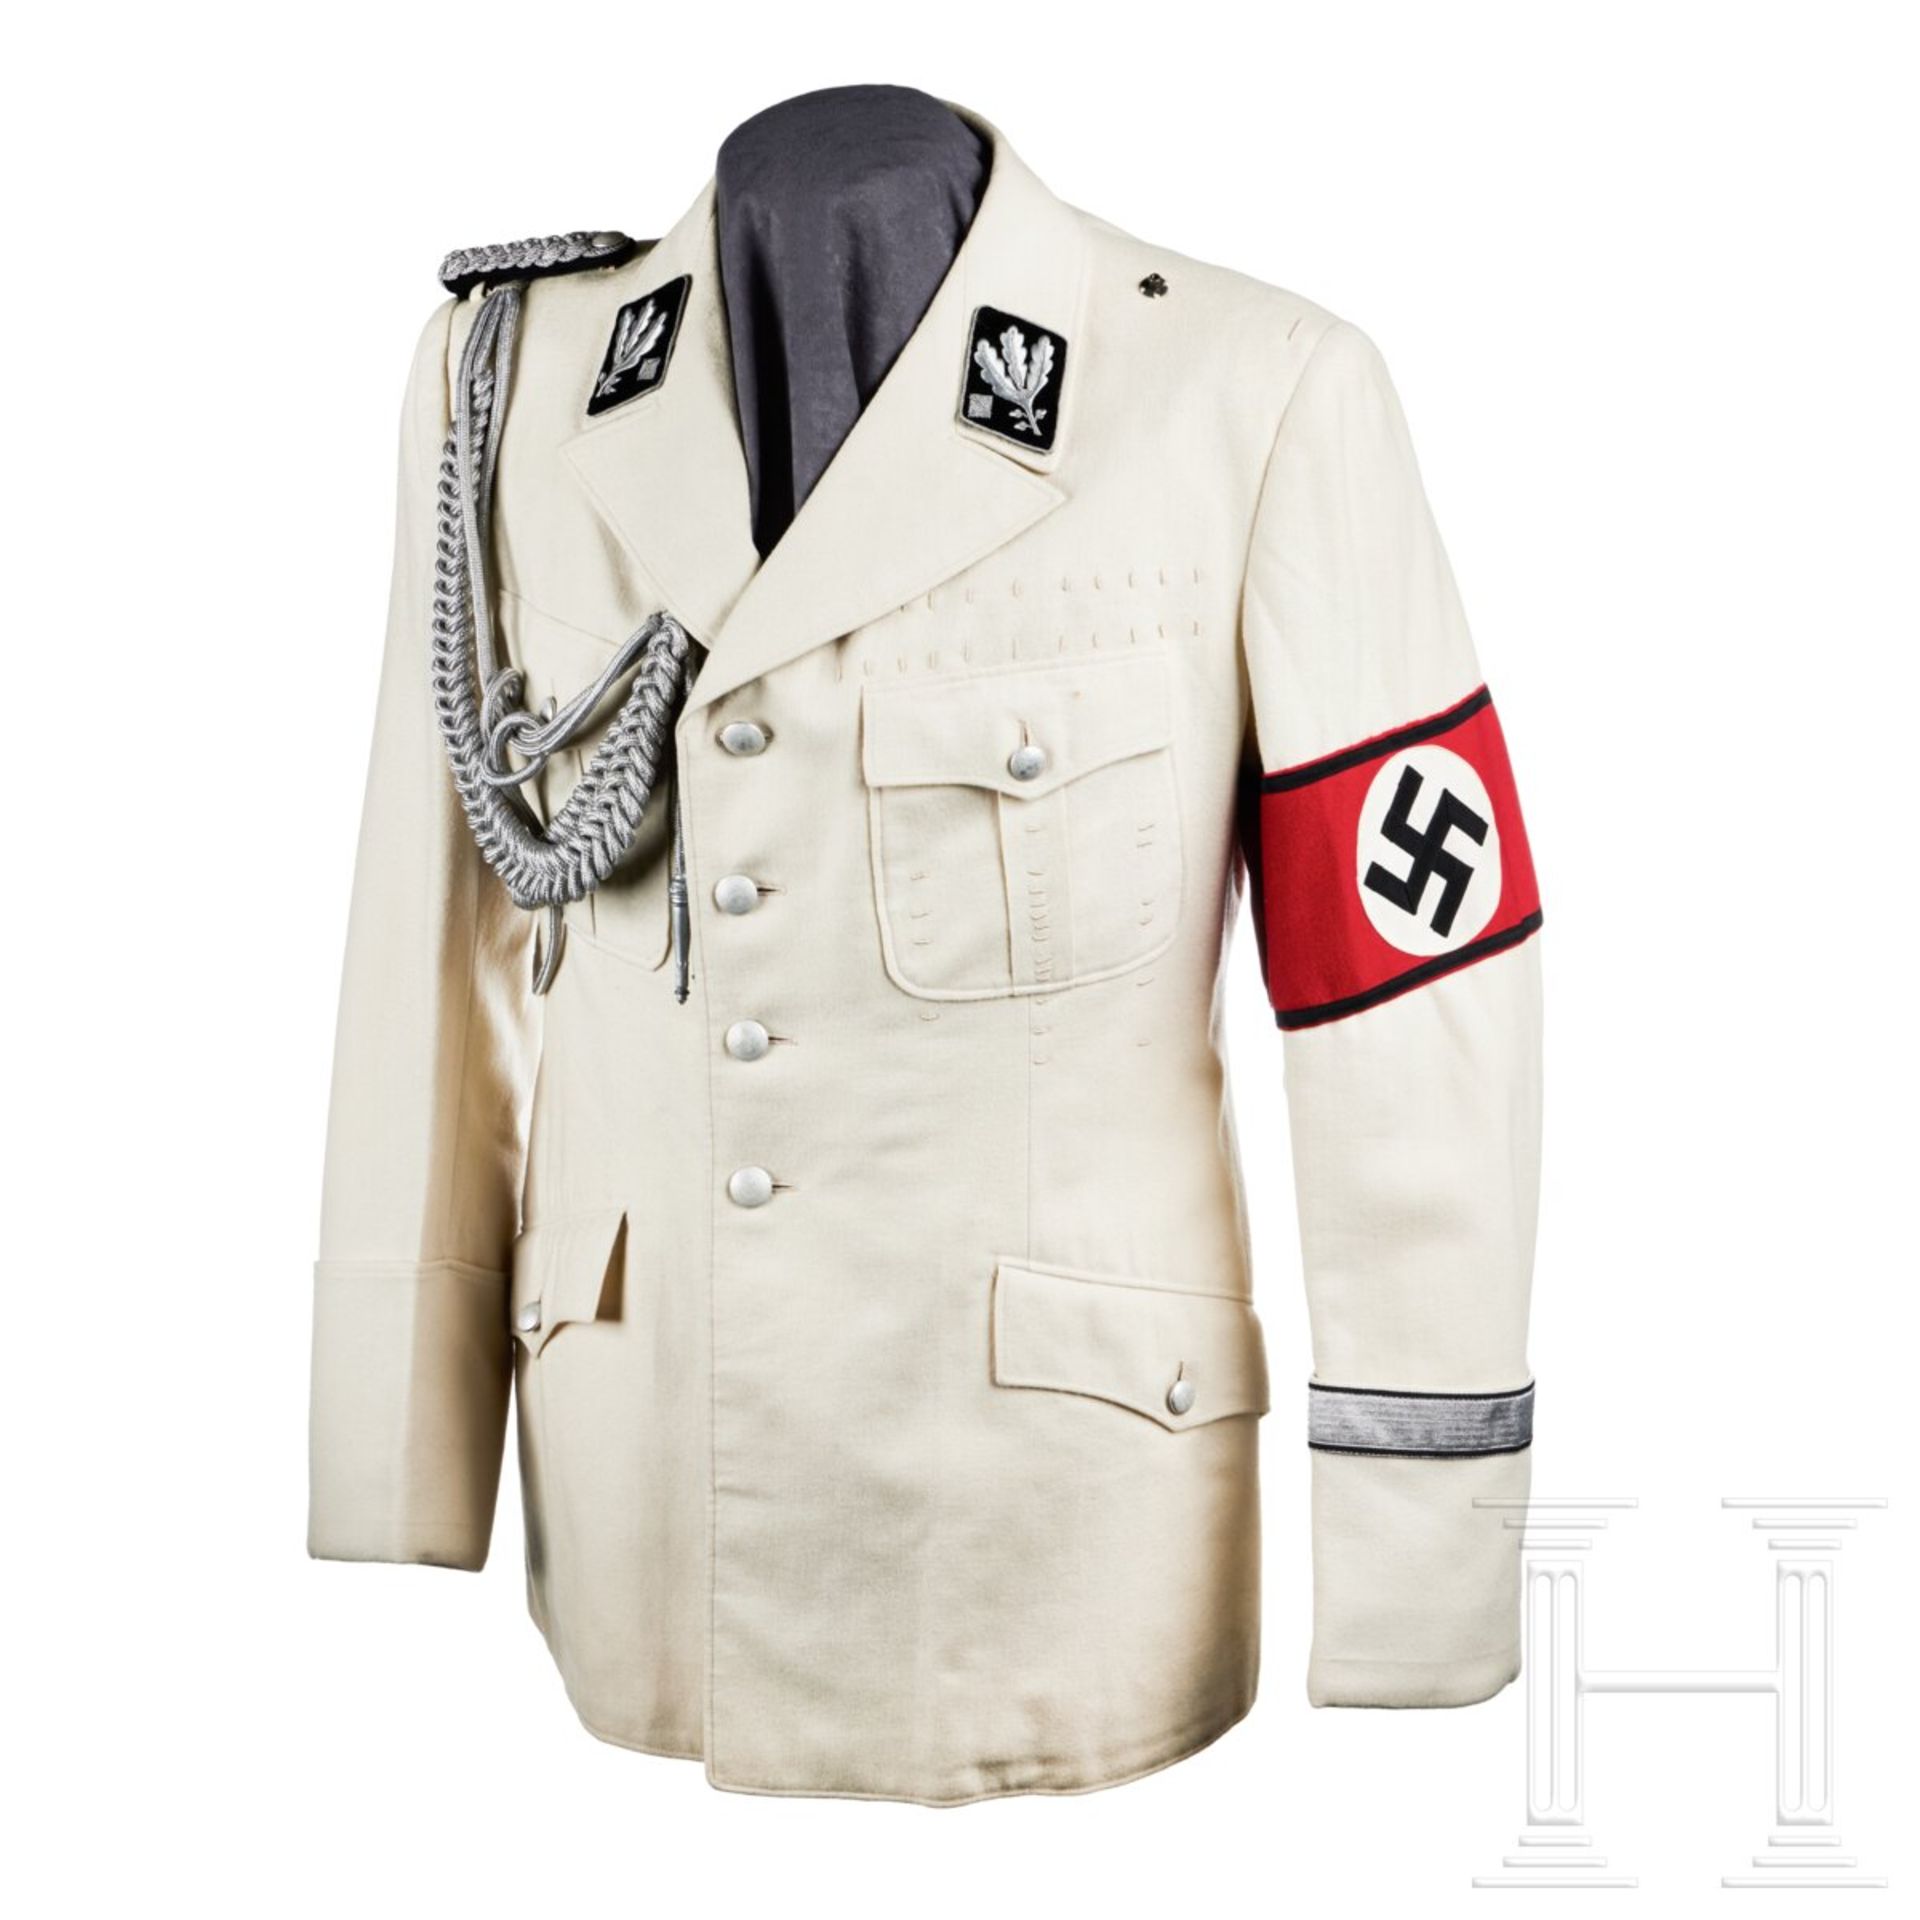 A White Service Uniform for SS Obergruppenführer Karl Wolff